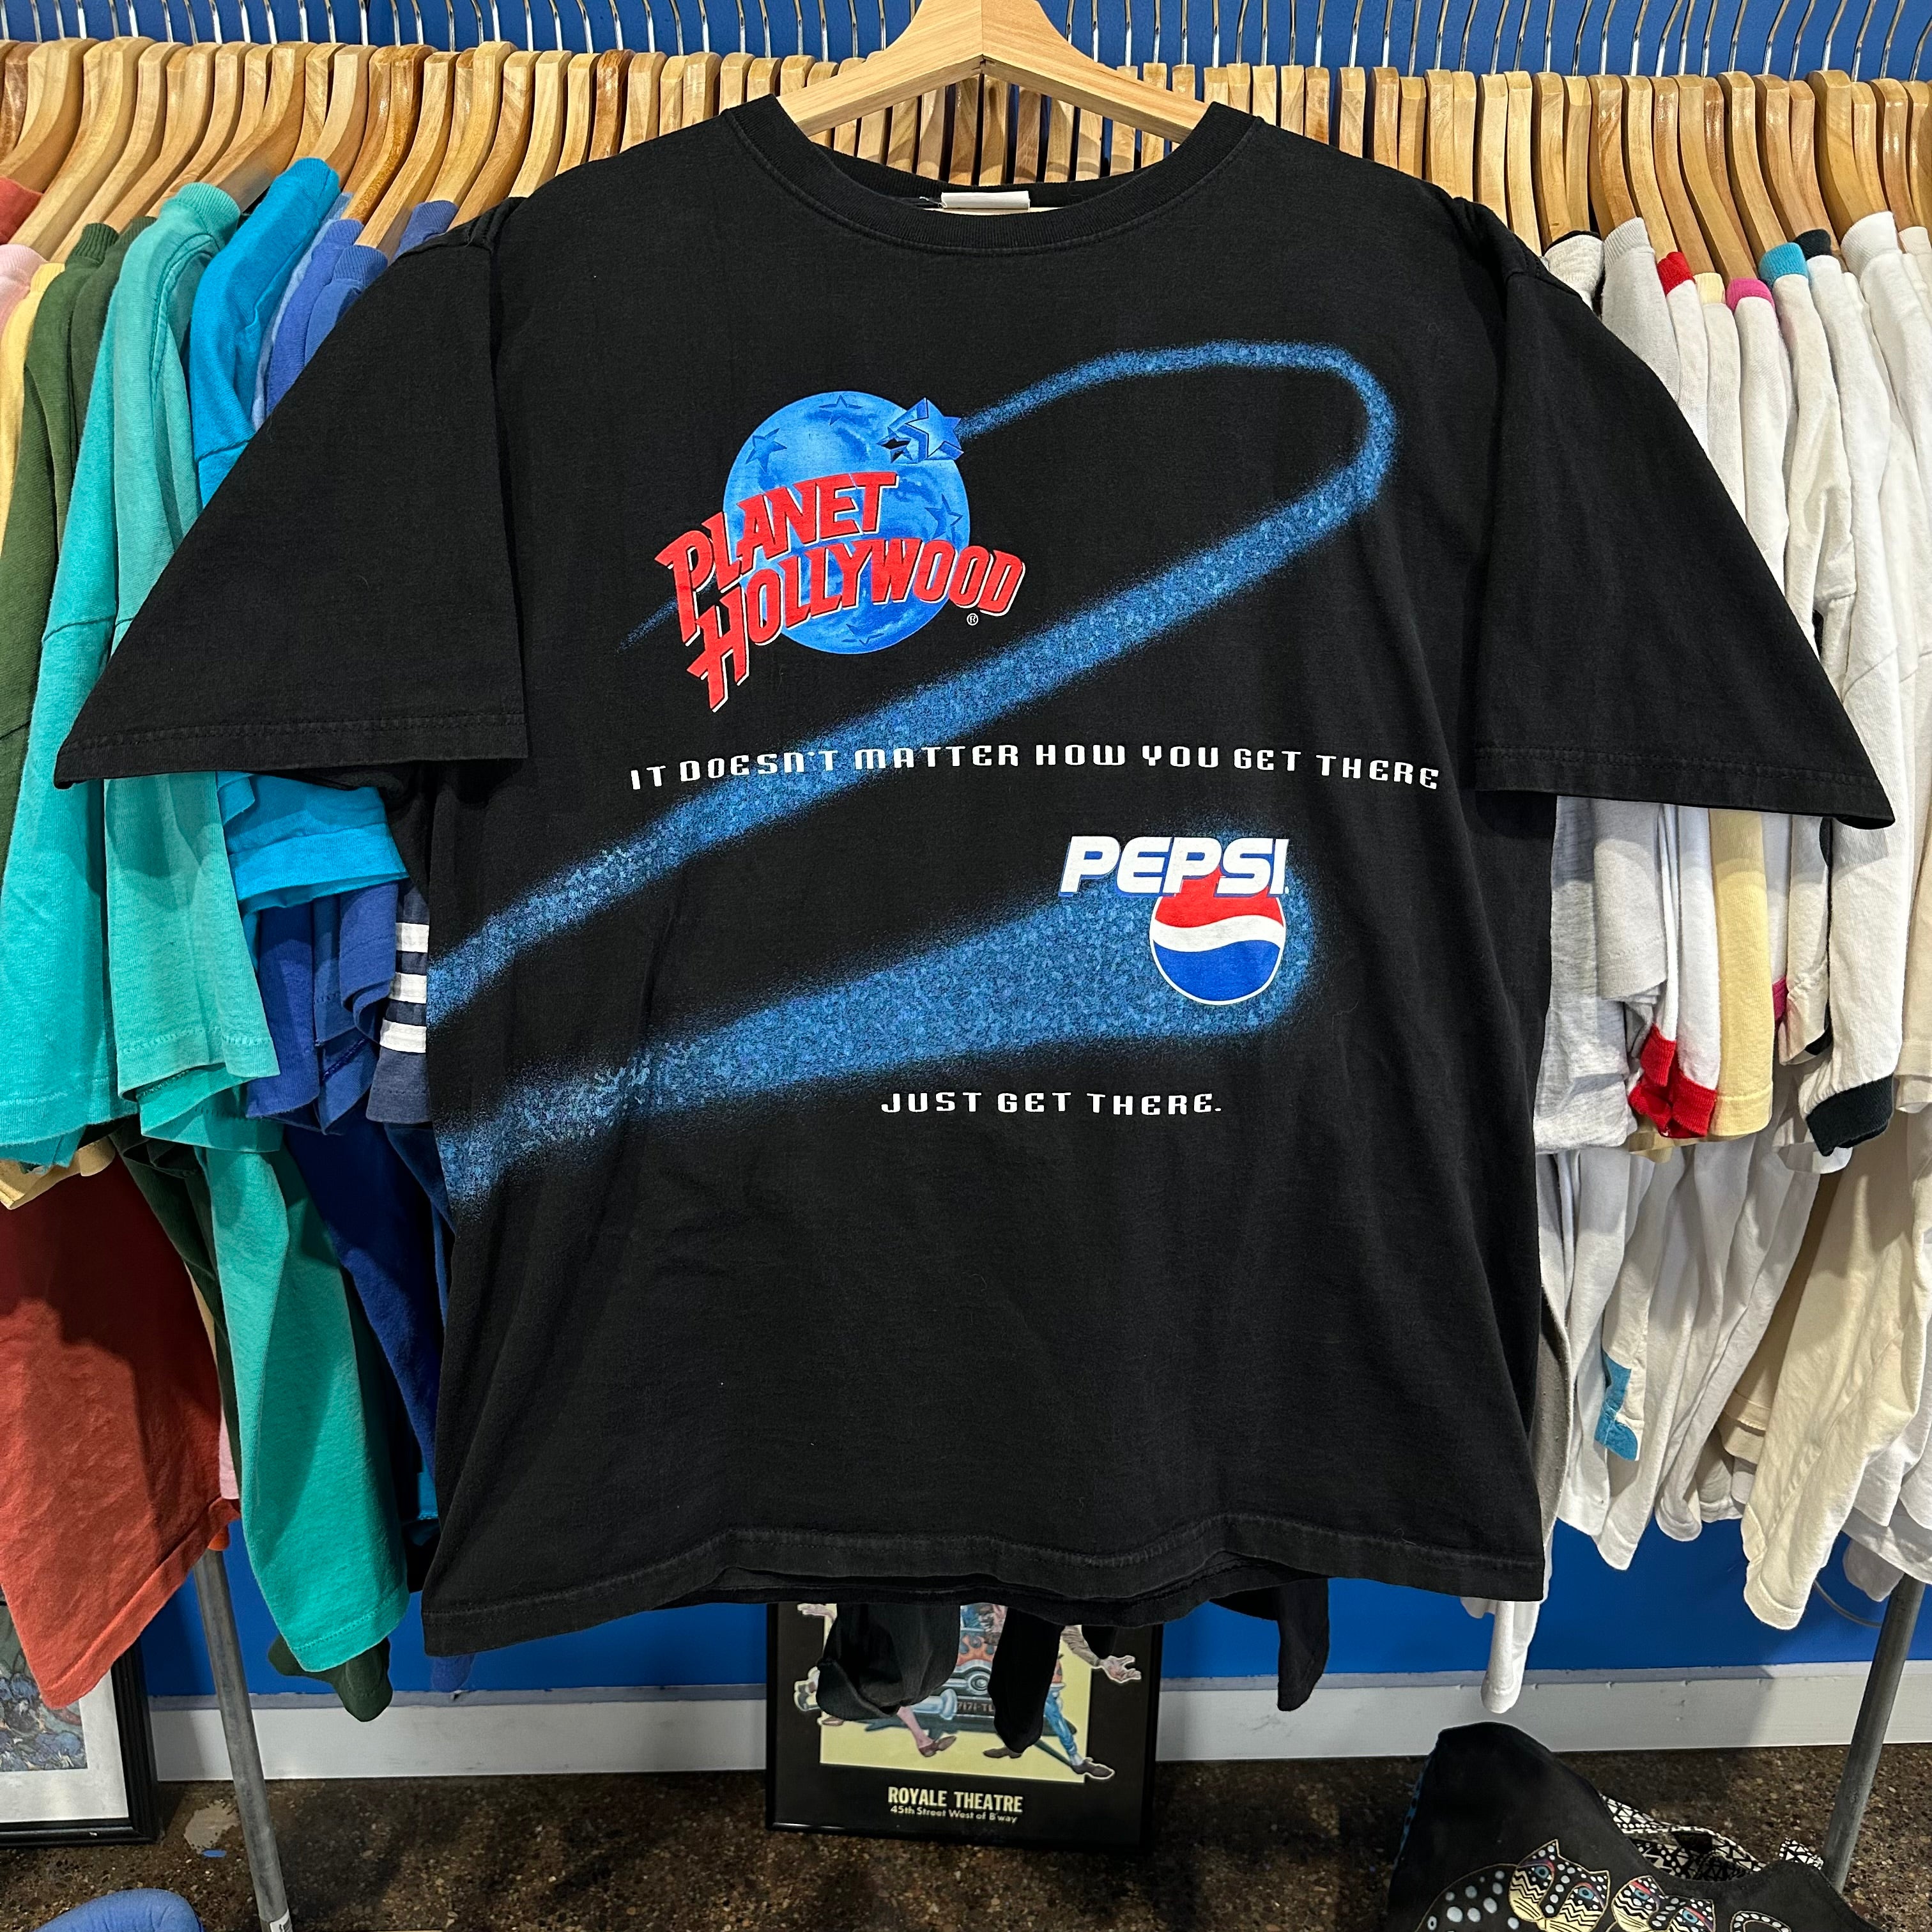 Planet Hollywood Pepsi T-Shirt